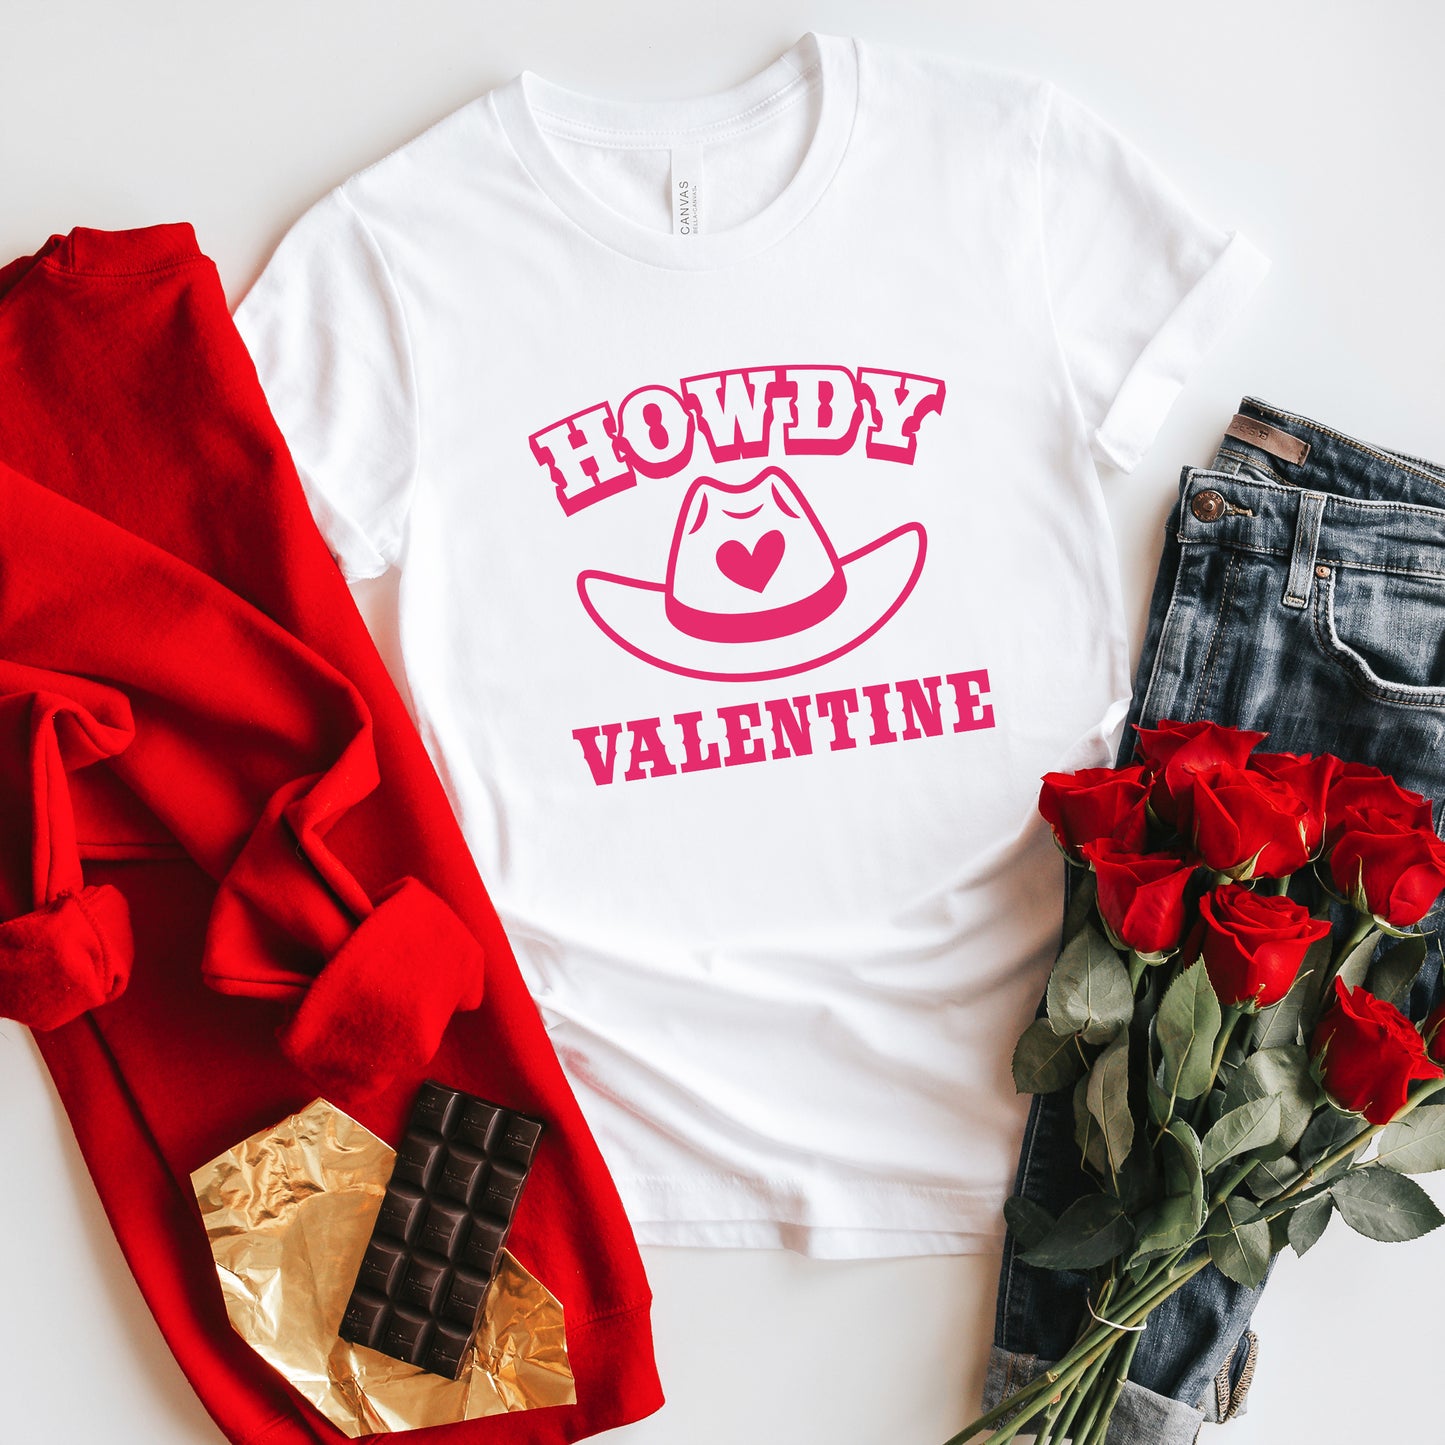 Howdy Valentine | Short Sleeve Graphic Tee